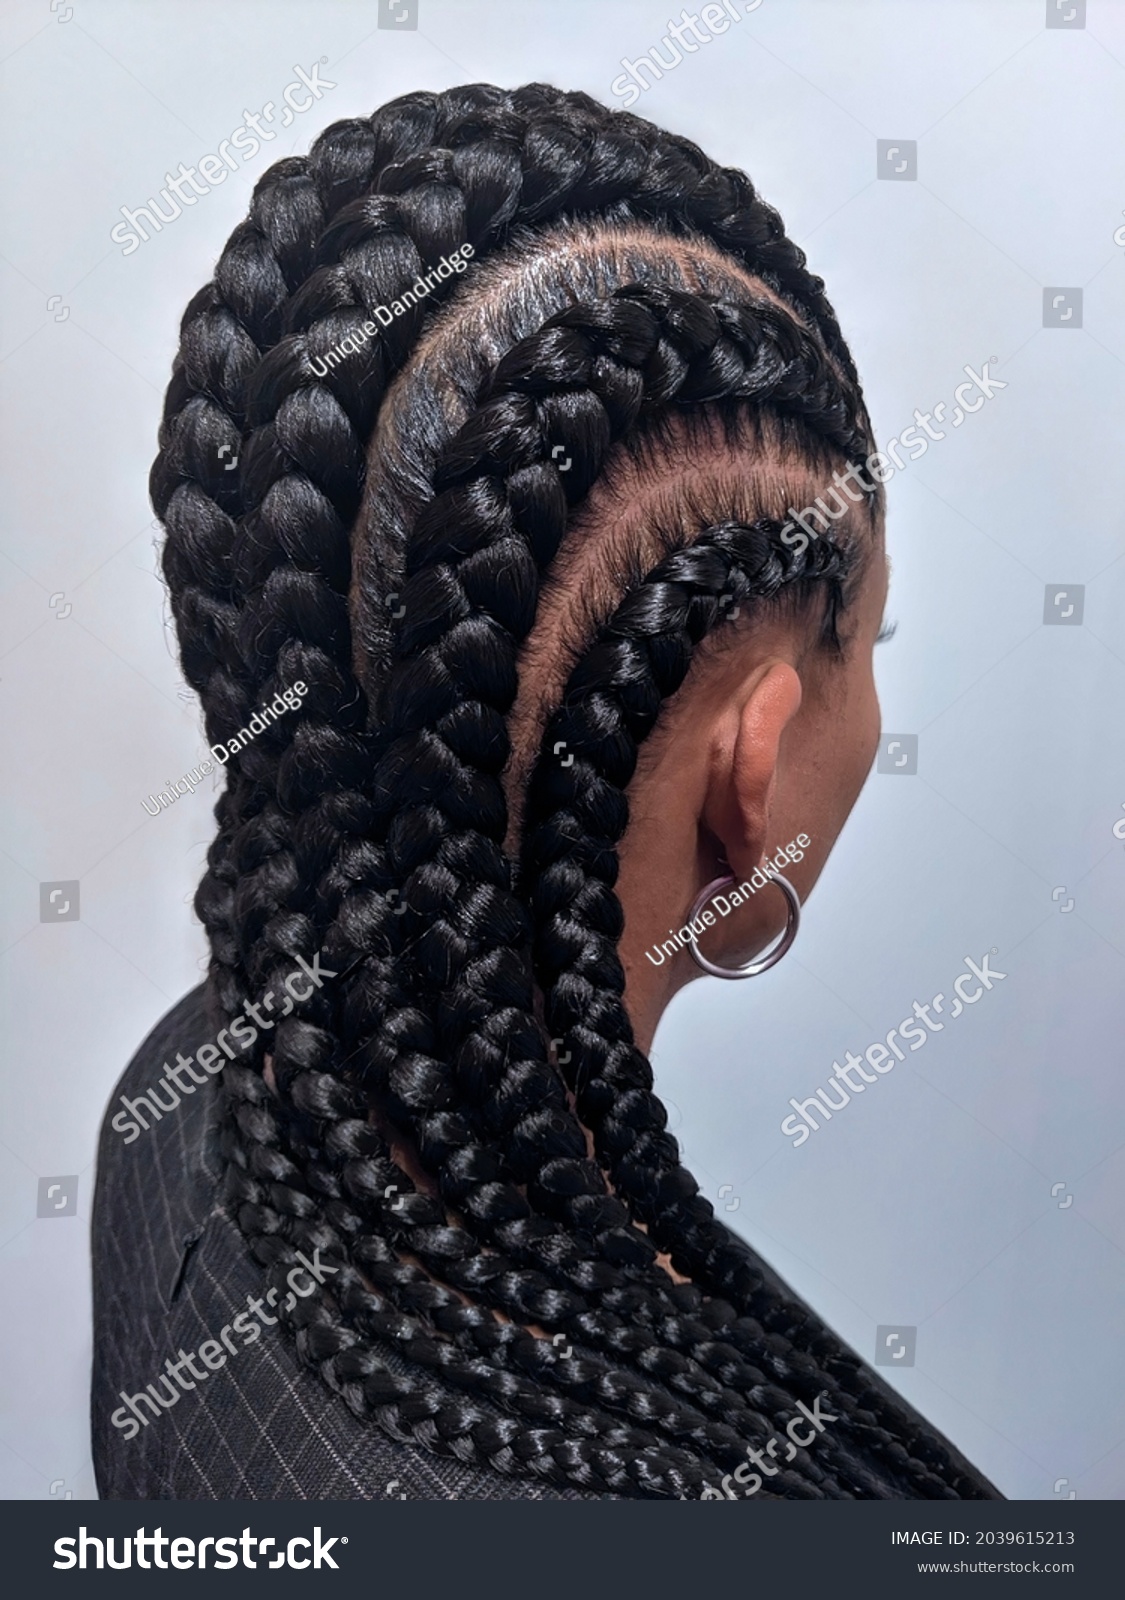 African braids Images, Stock Photos & Vectors   Shutterstock